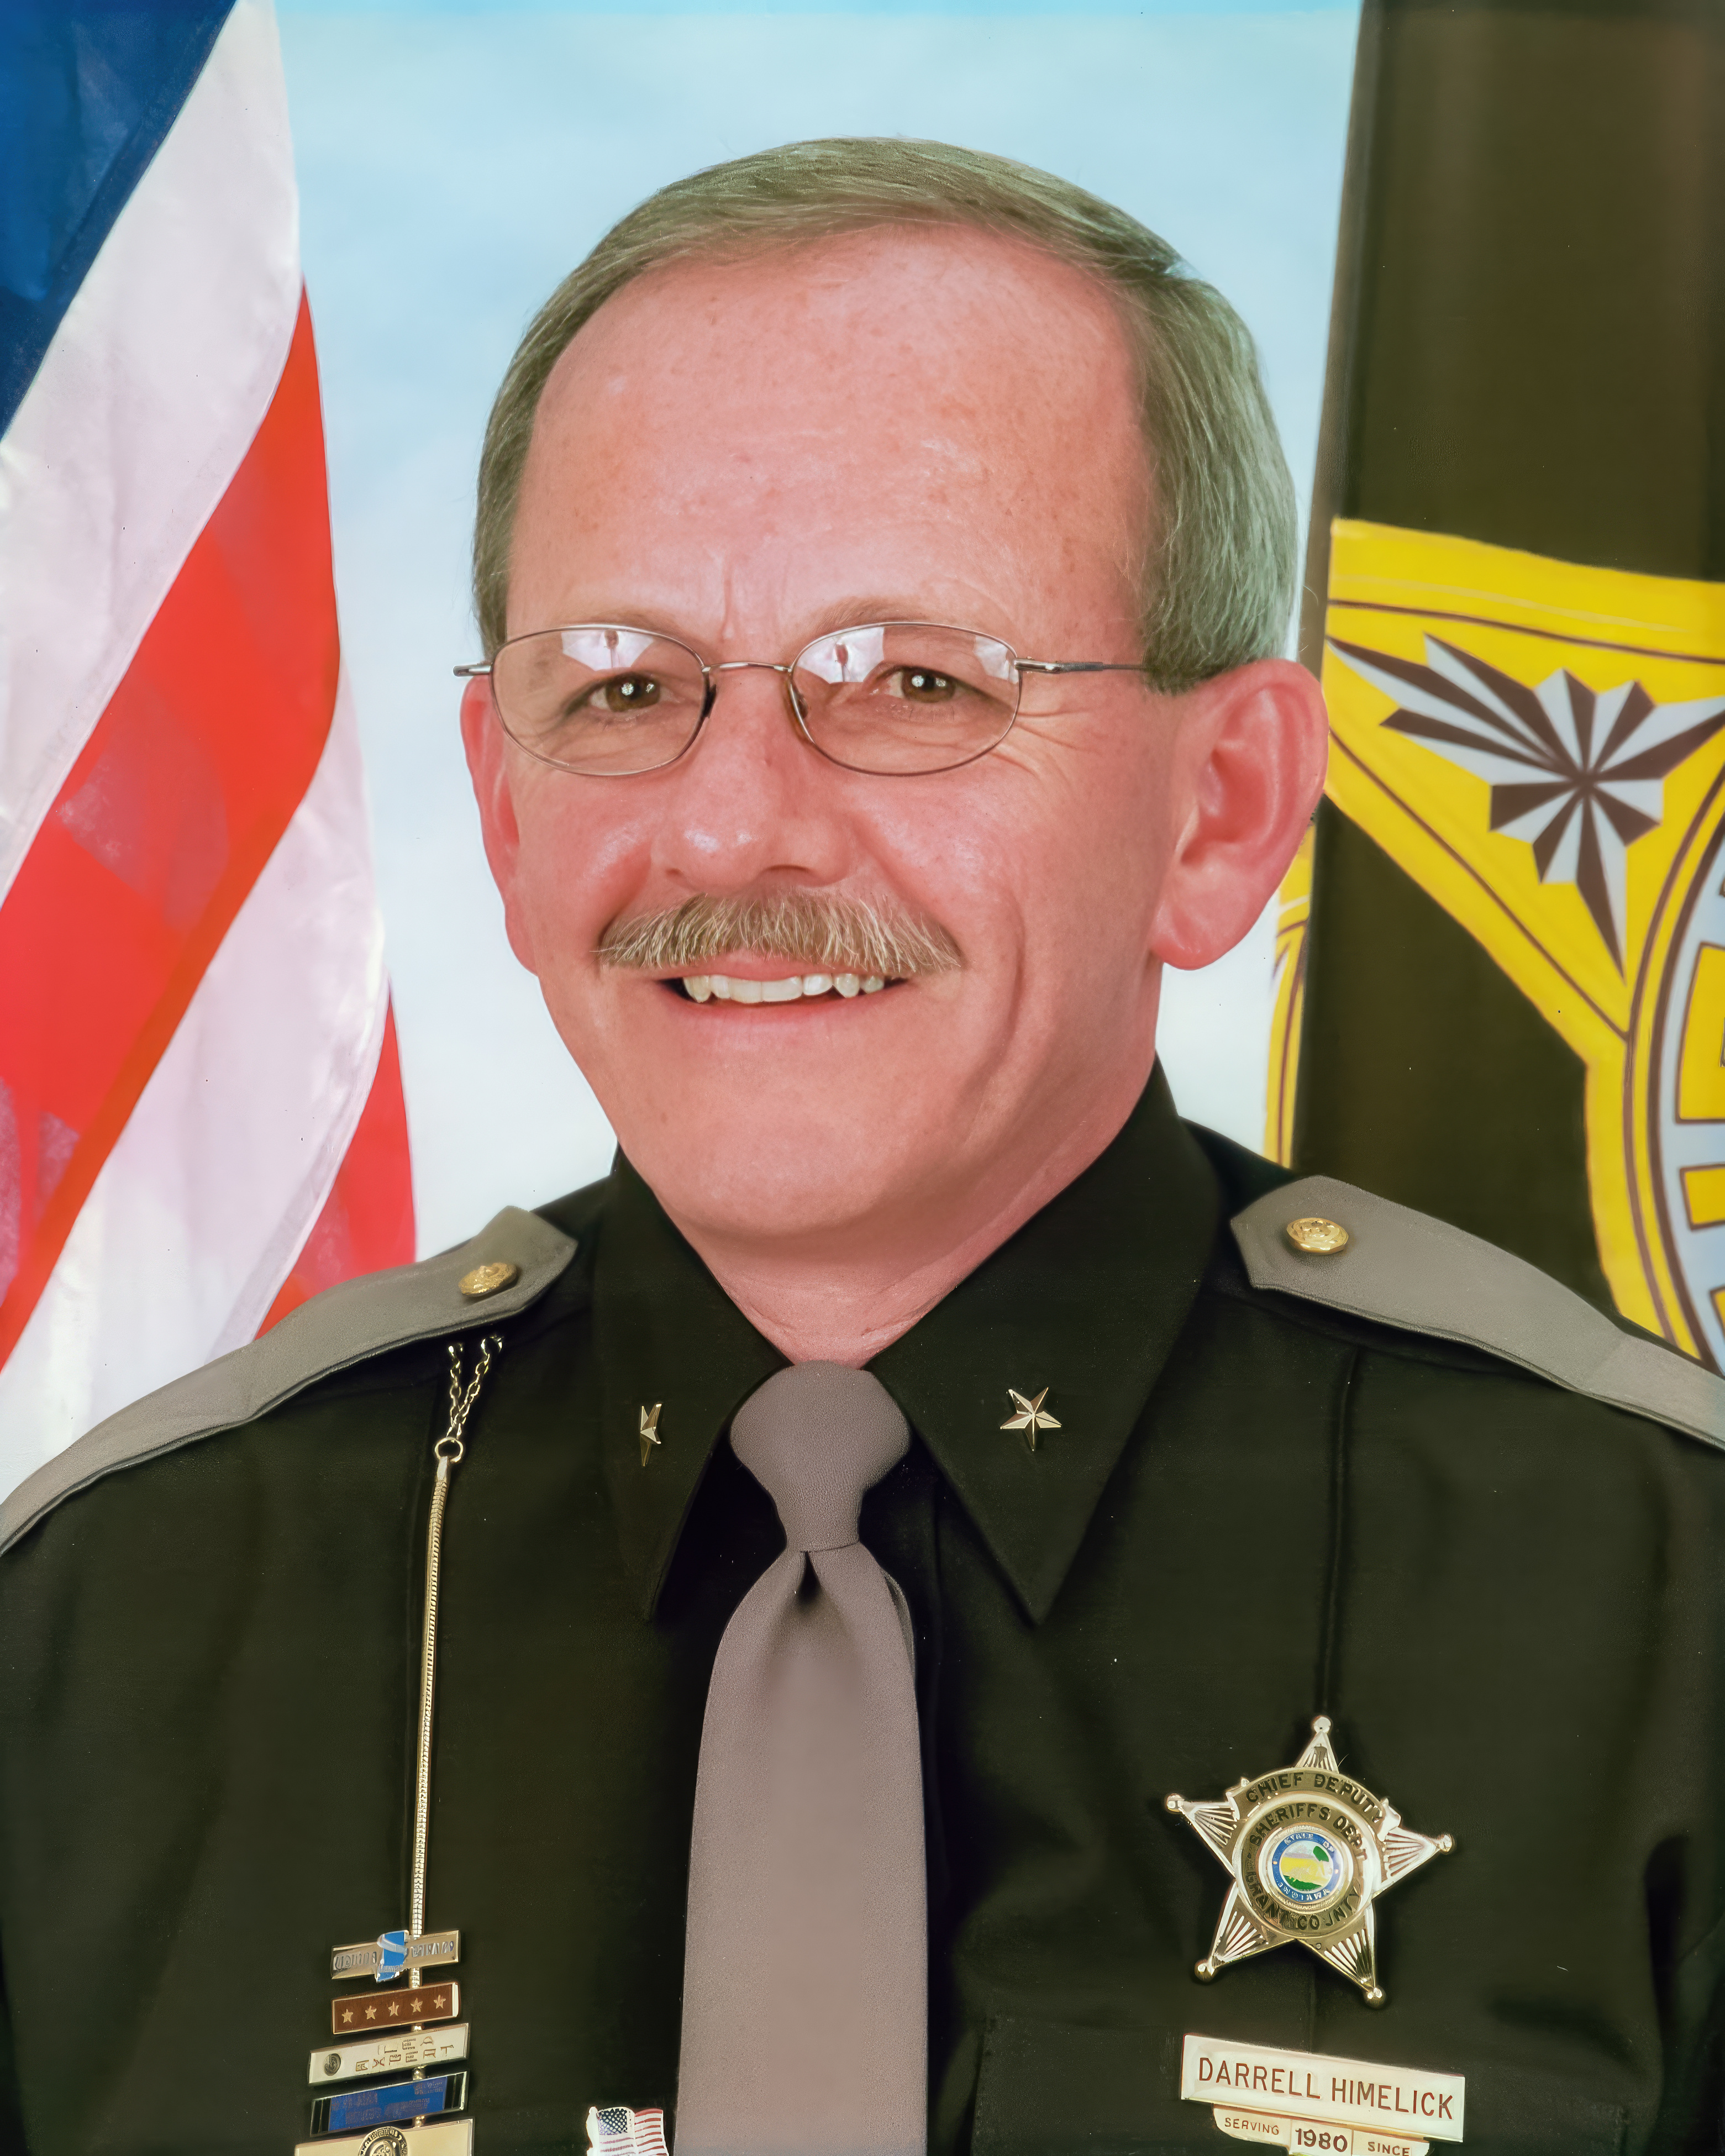 Sheriff Himelick